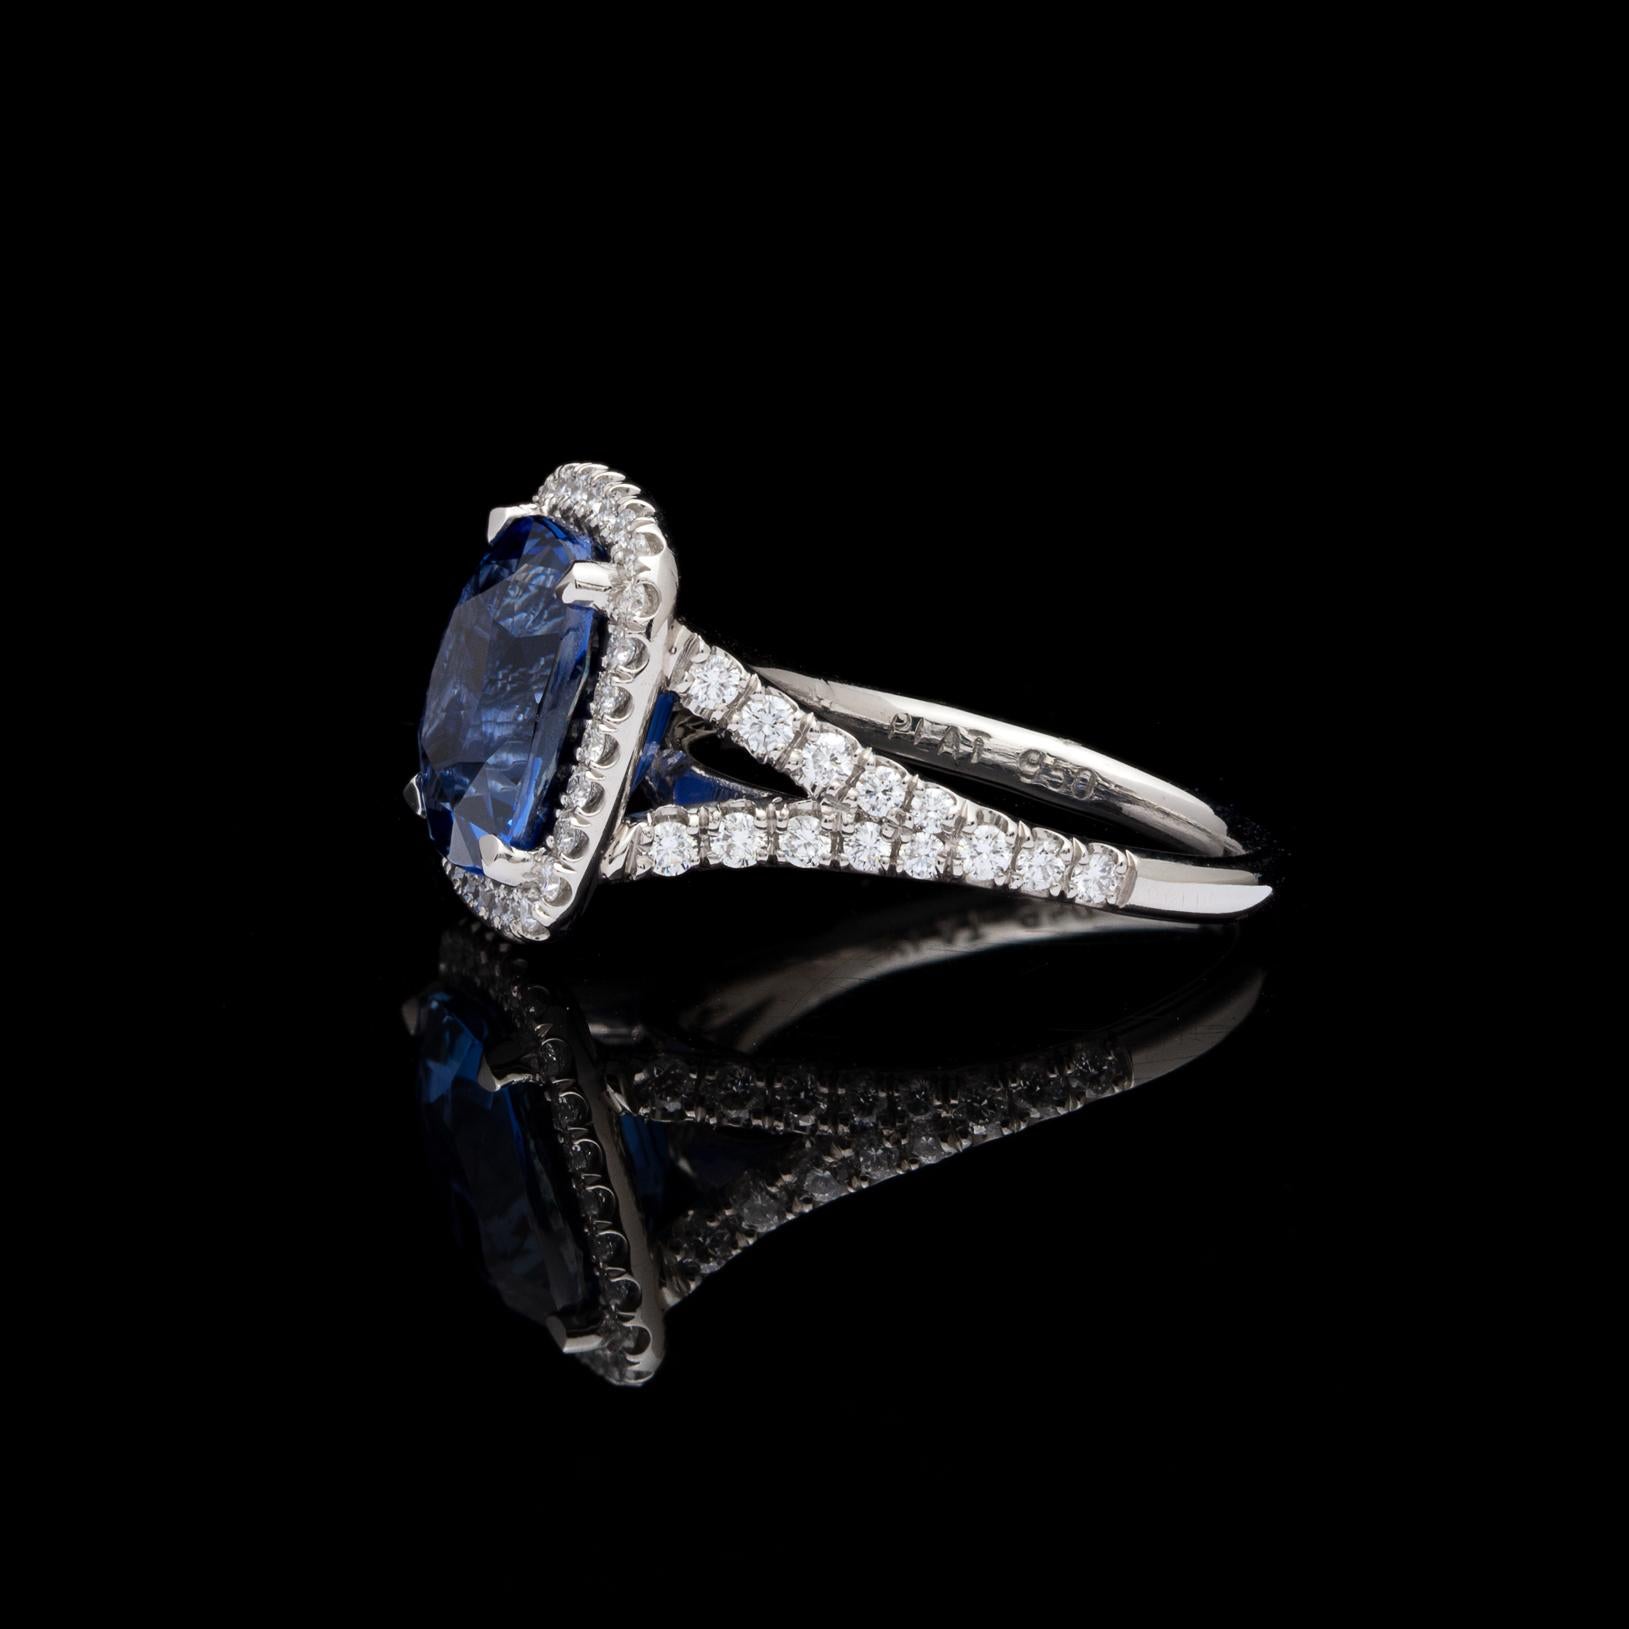 Cushion Cut Spectacular GIA 7.06 Carat Unheated Natural Sapphire Diamond Ring